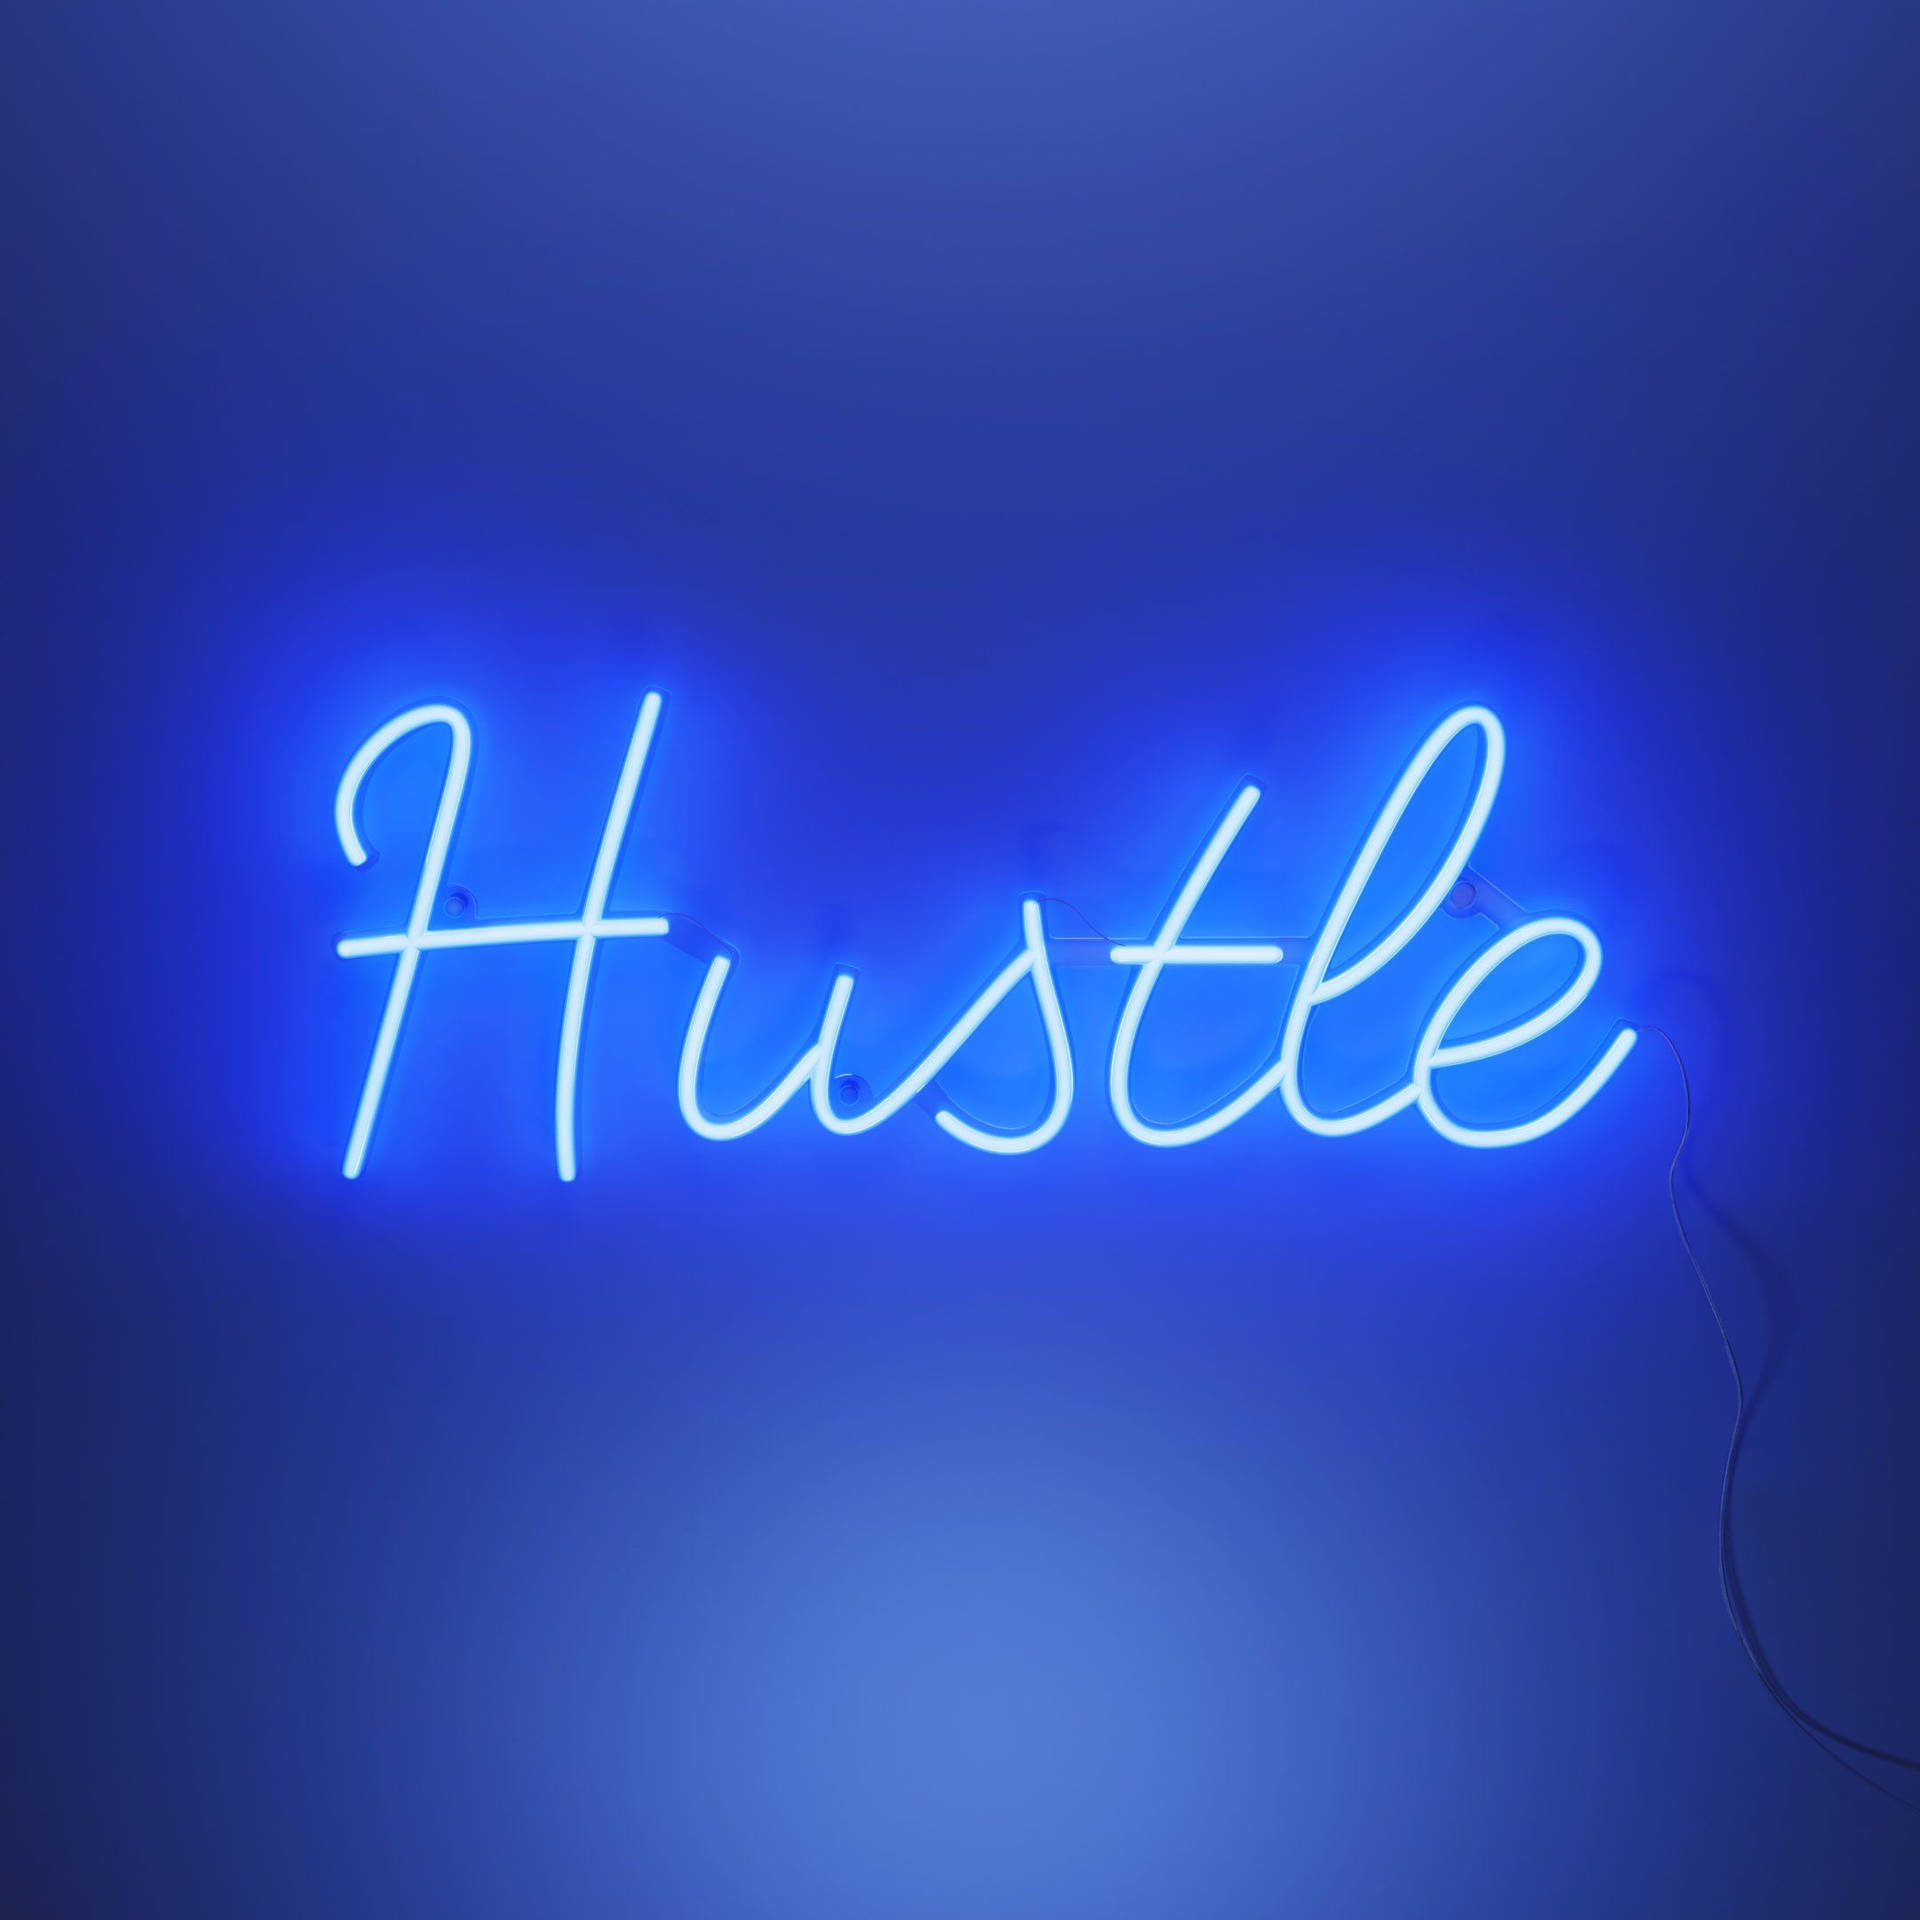 Neon Blue Aesthetic Hustle Signage Wallpaper